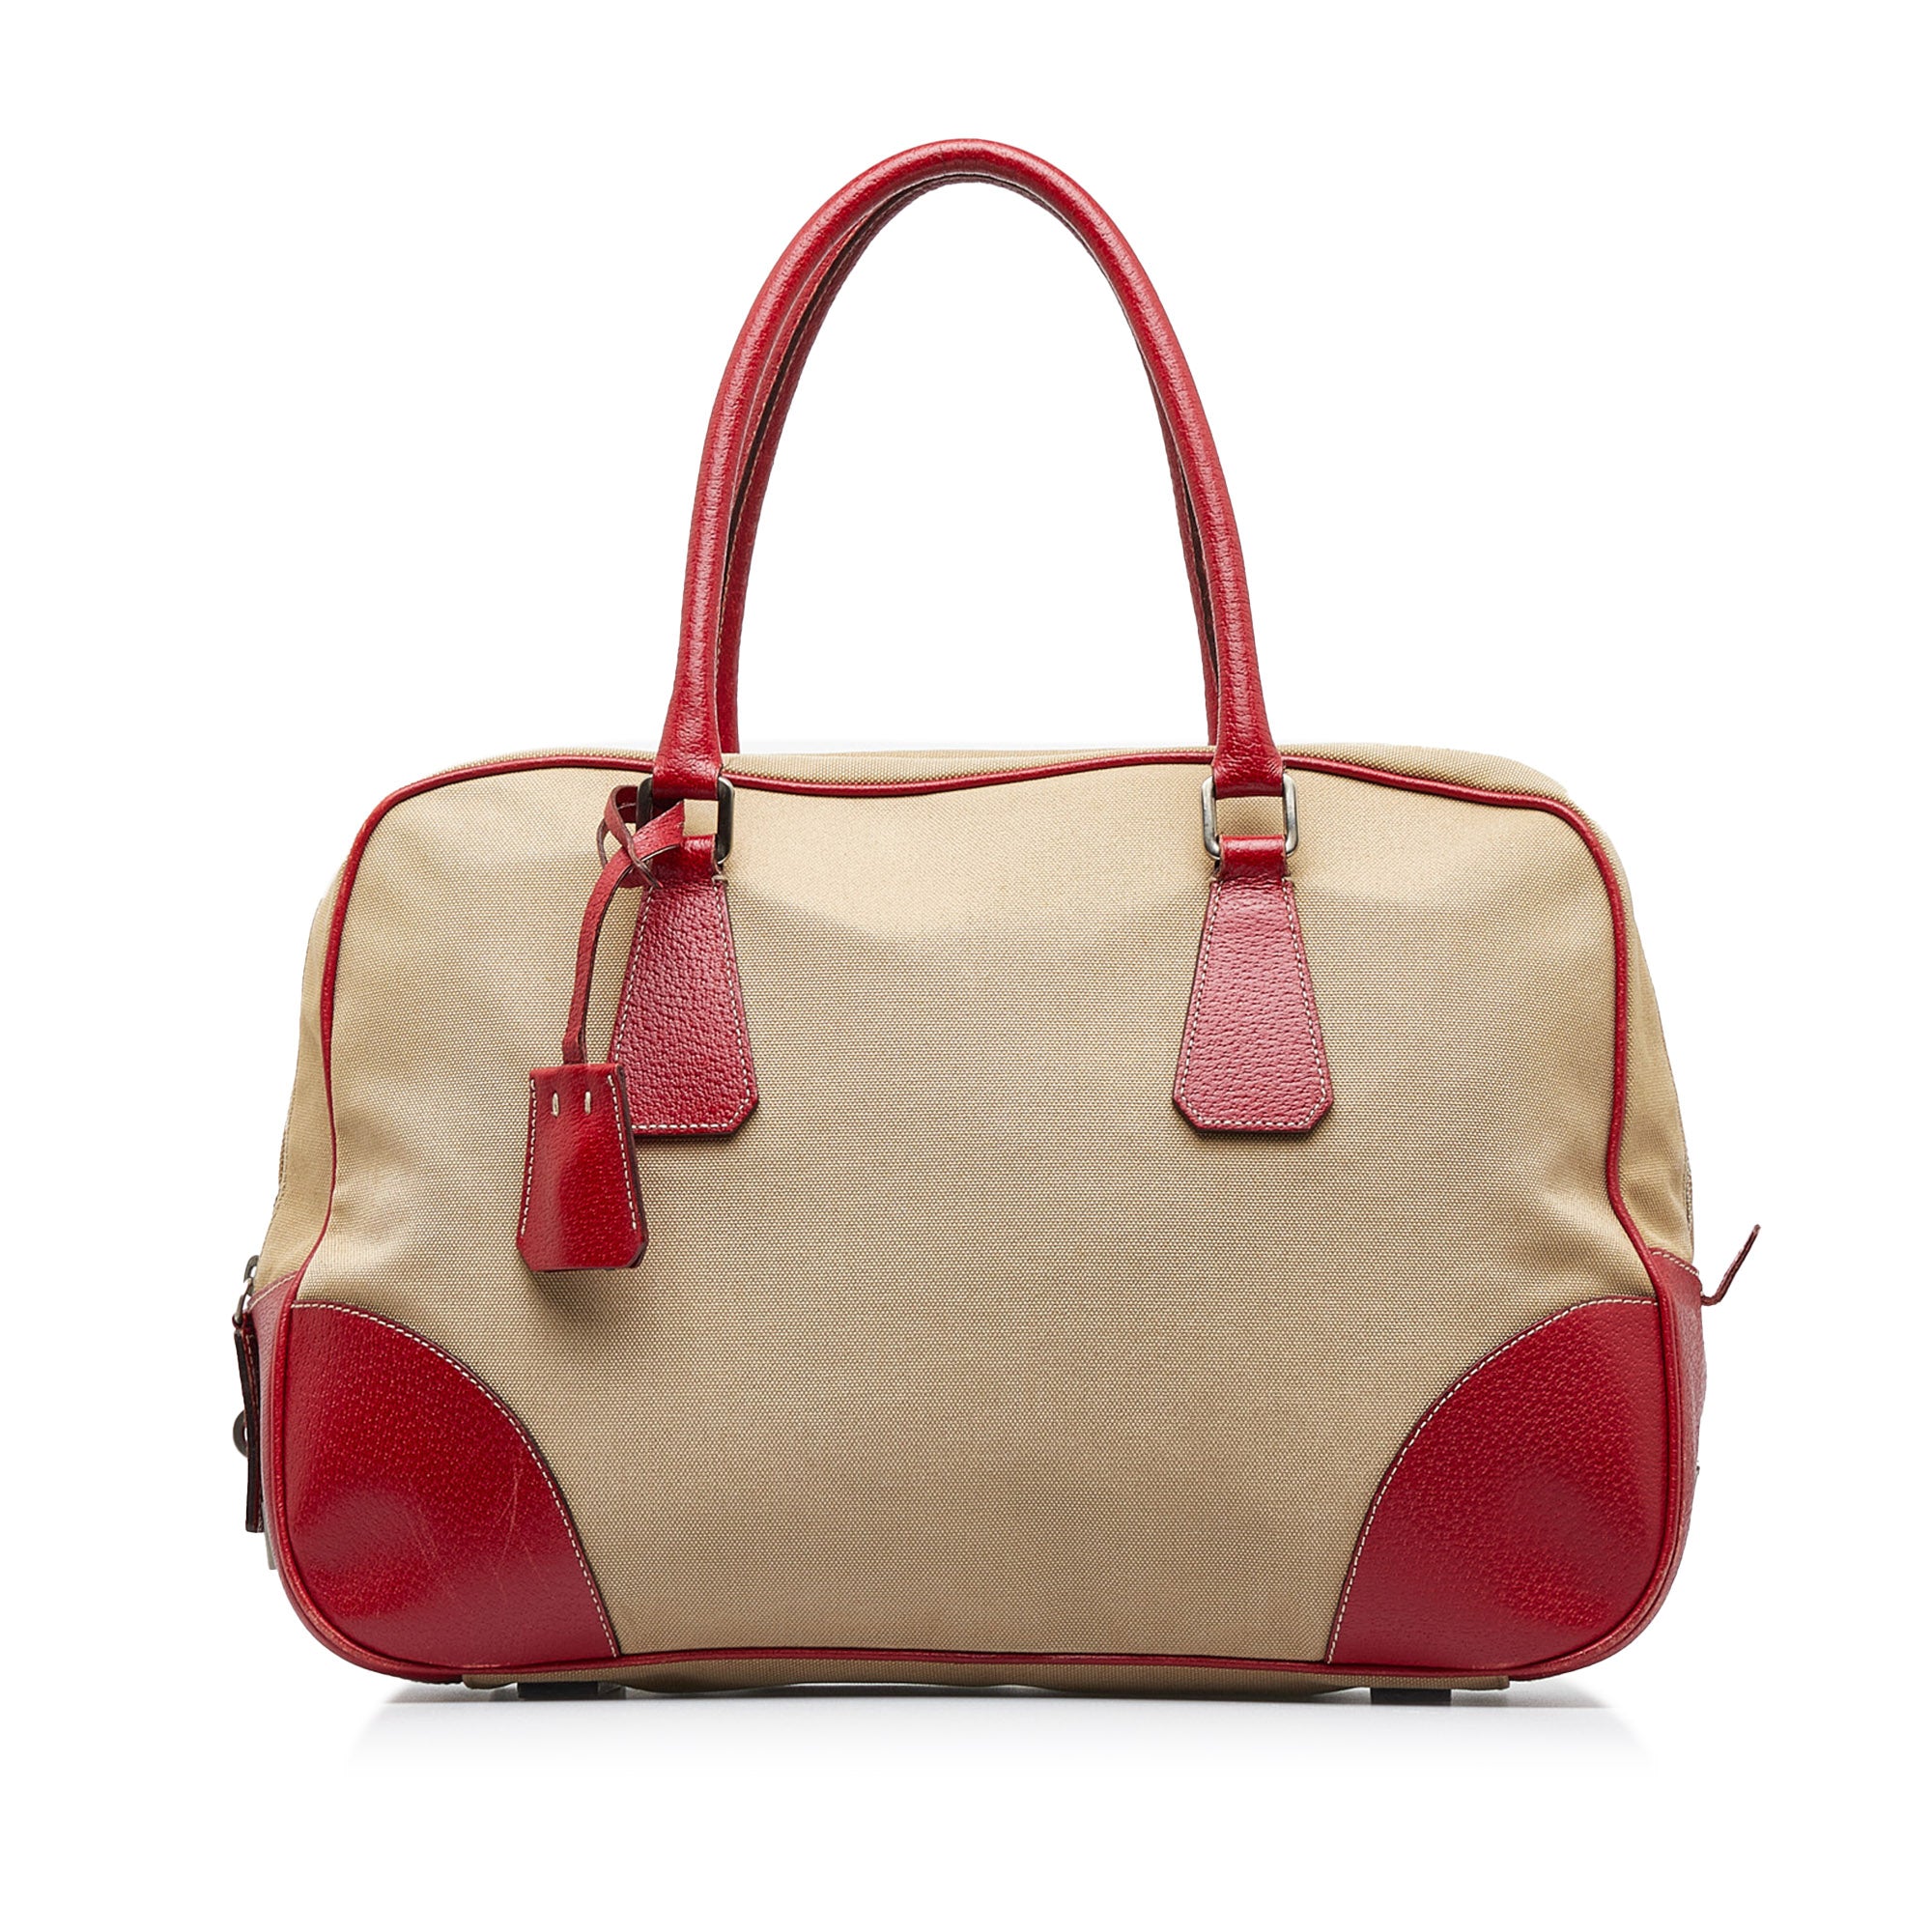 Celine Womens Vintage Boogie Bag Leather Rolled Handle Tote Handbag Beige